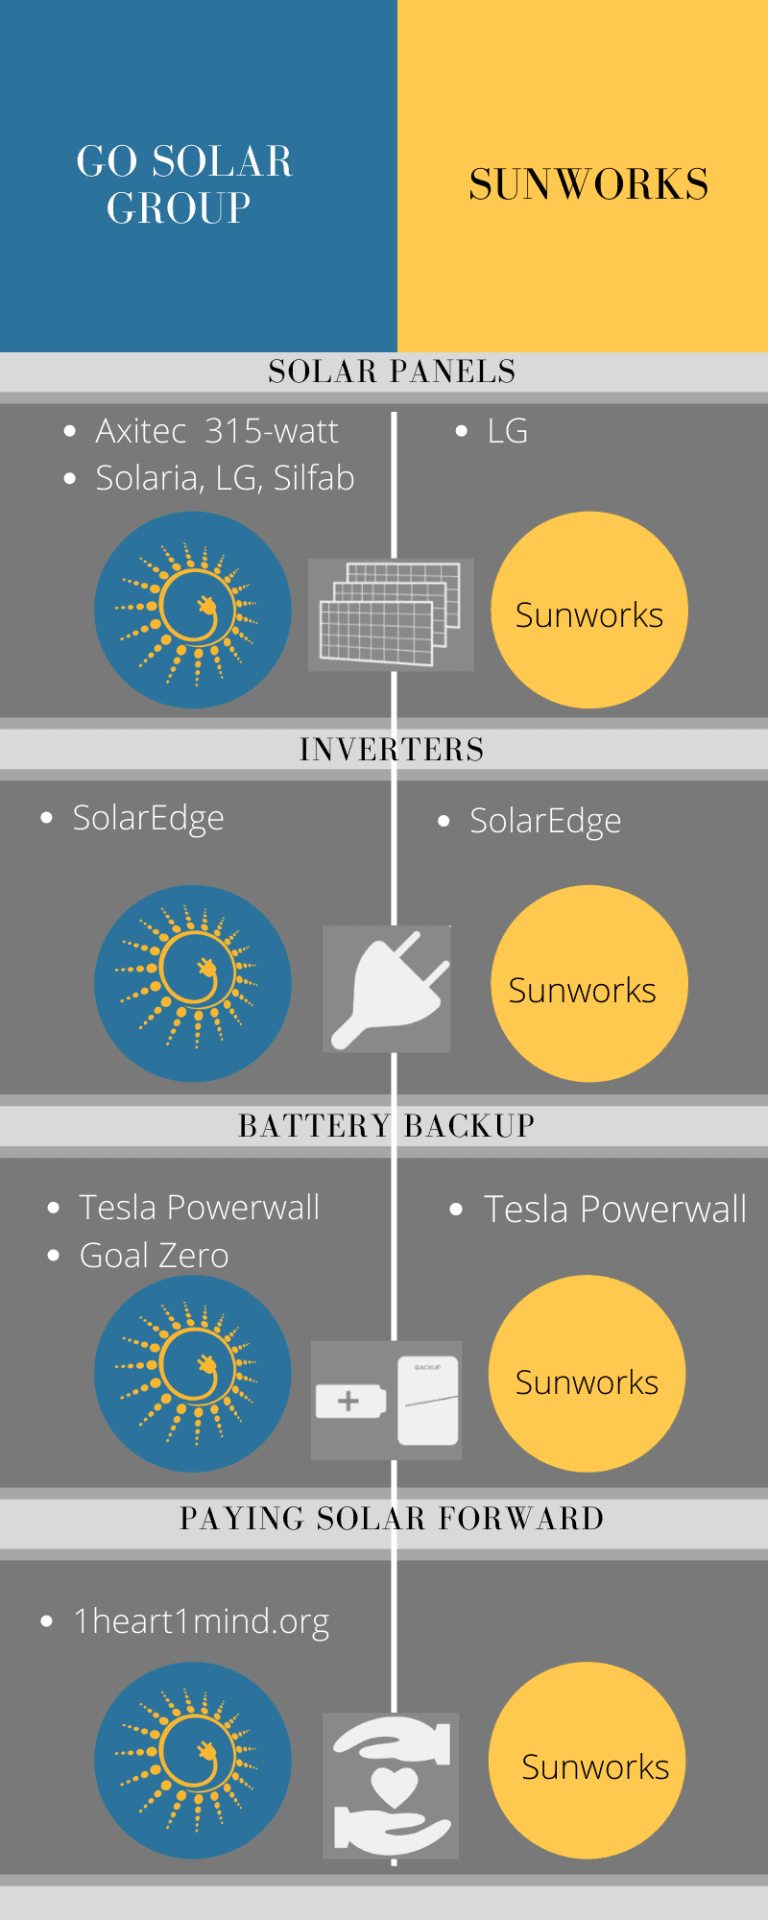 Sunworks competitor comparison